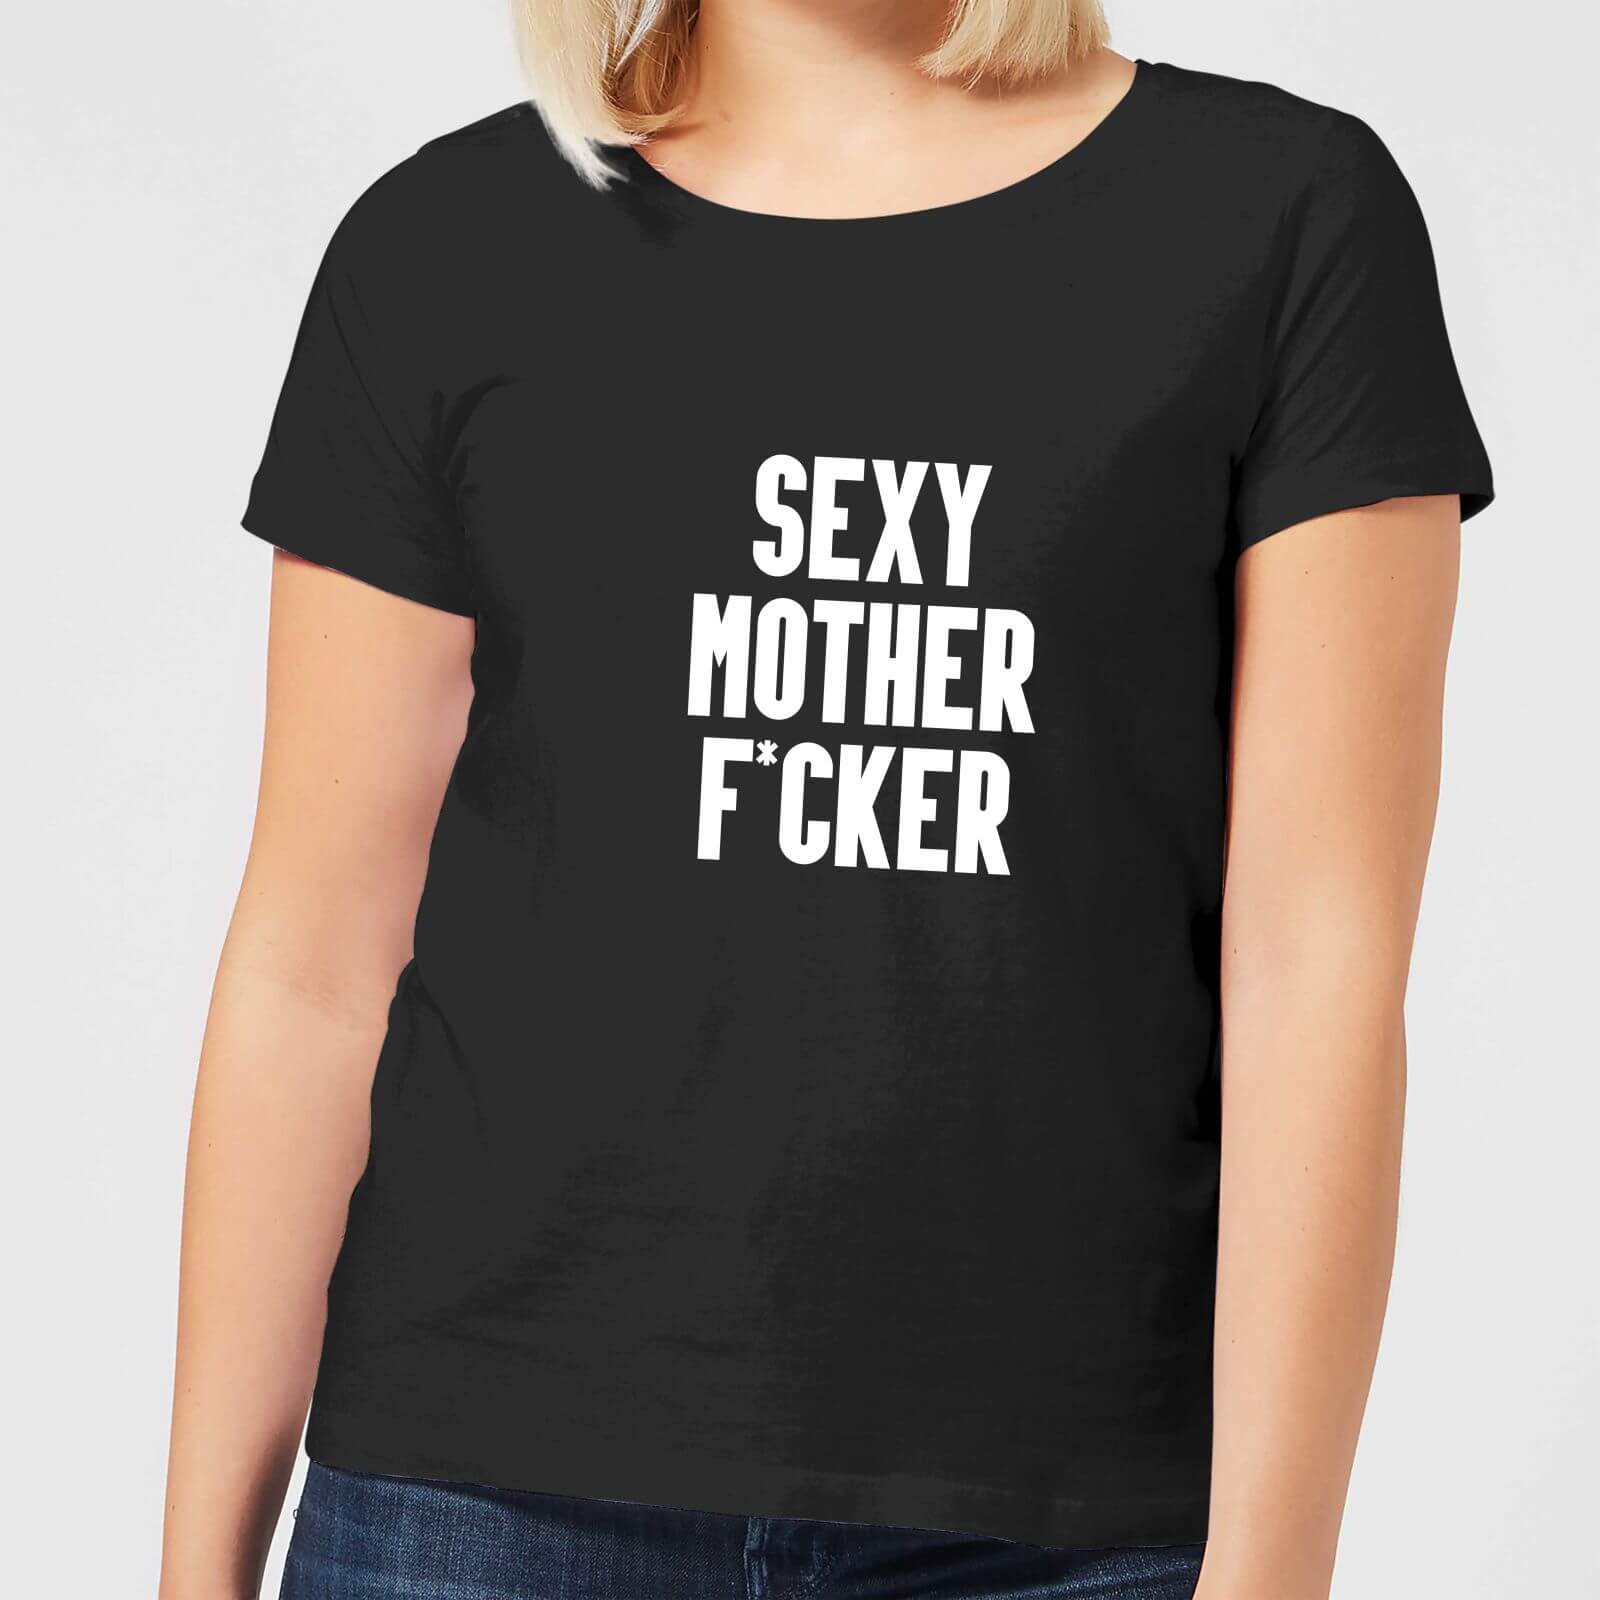 Sexy Mother F*cker Women's T-Shirt - Black - S - Black